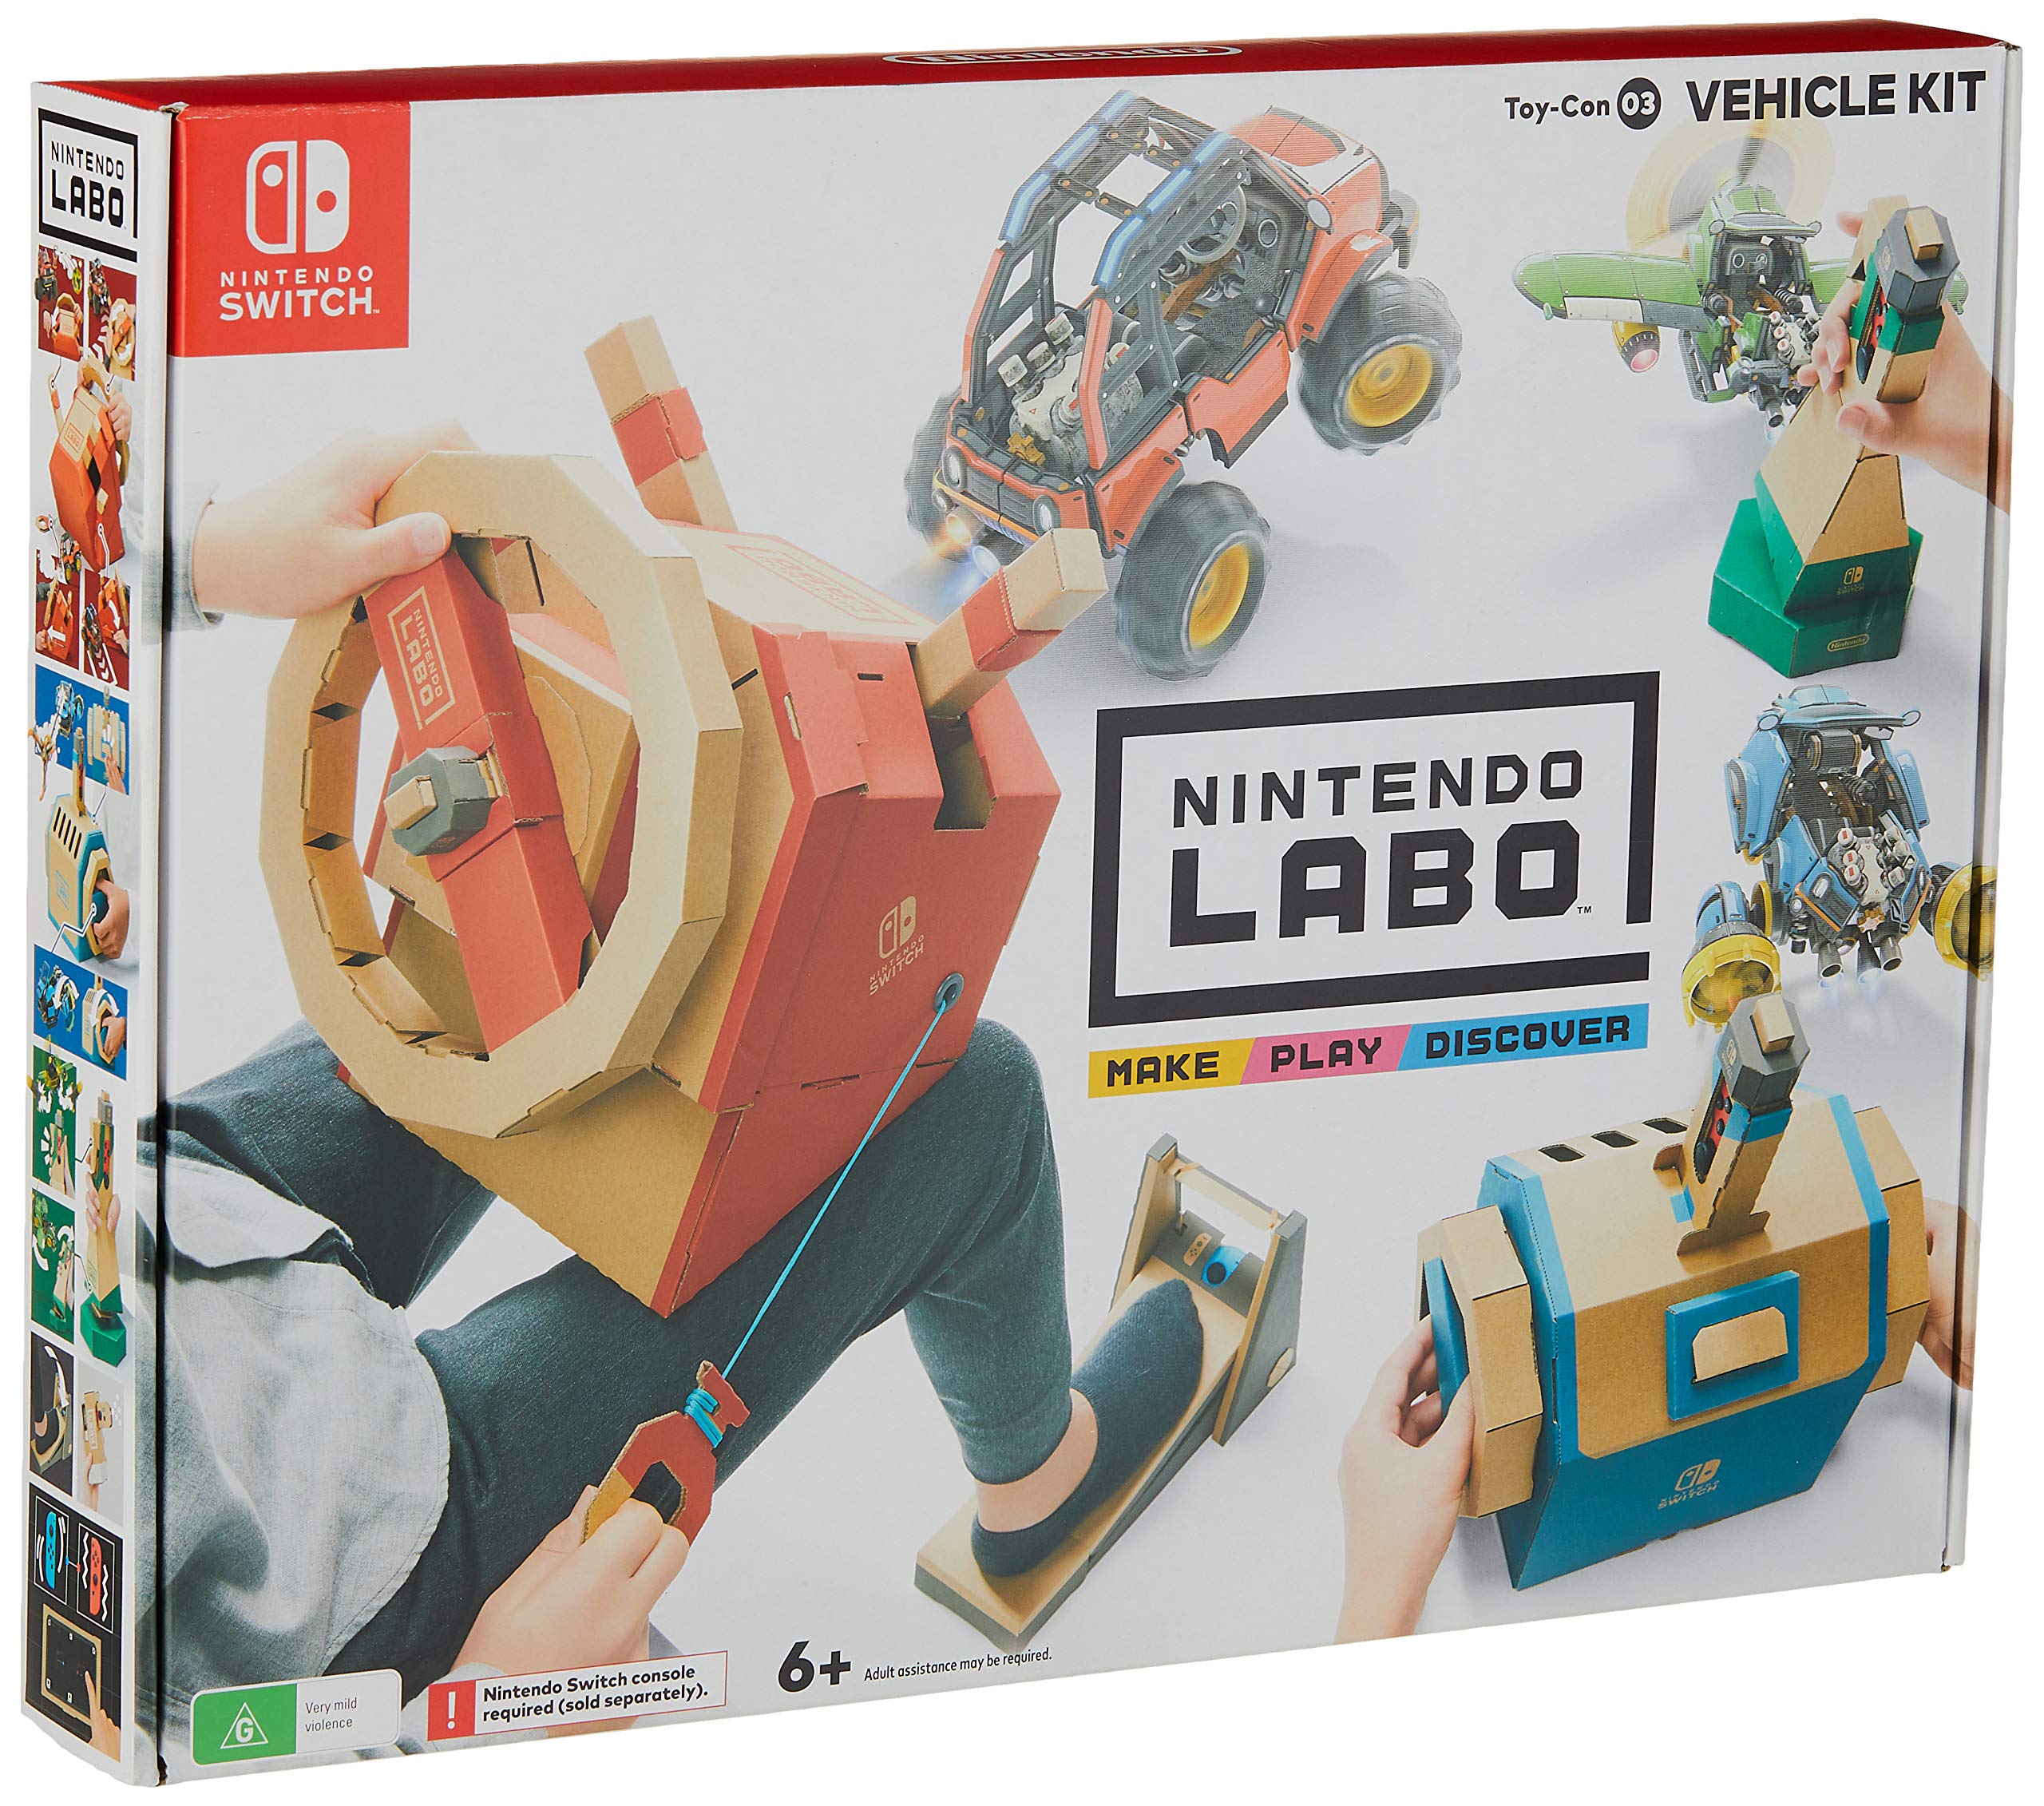 Accessory | Nintendo Switch | New Nintendo Labo Toy-Con 03 Vehicle Kit